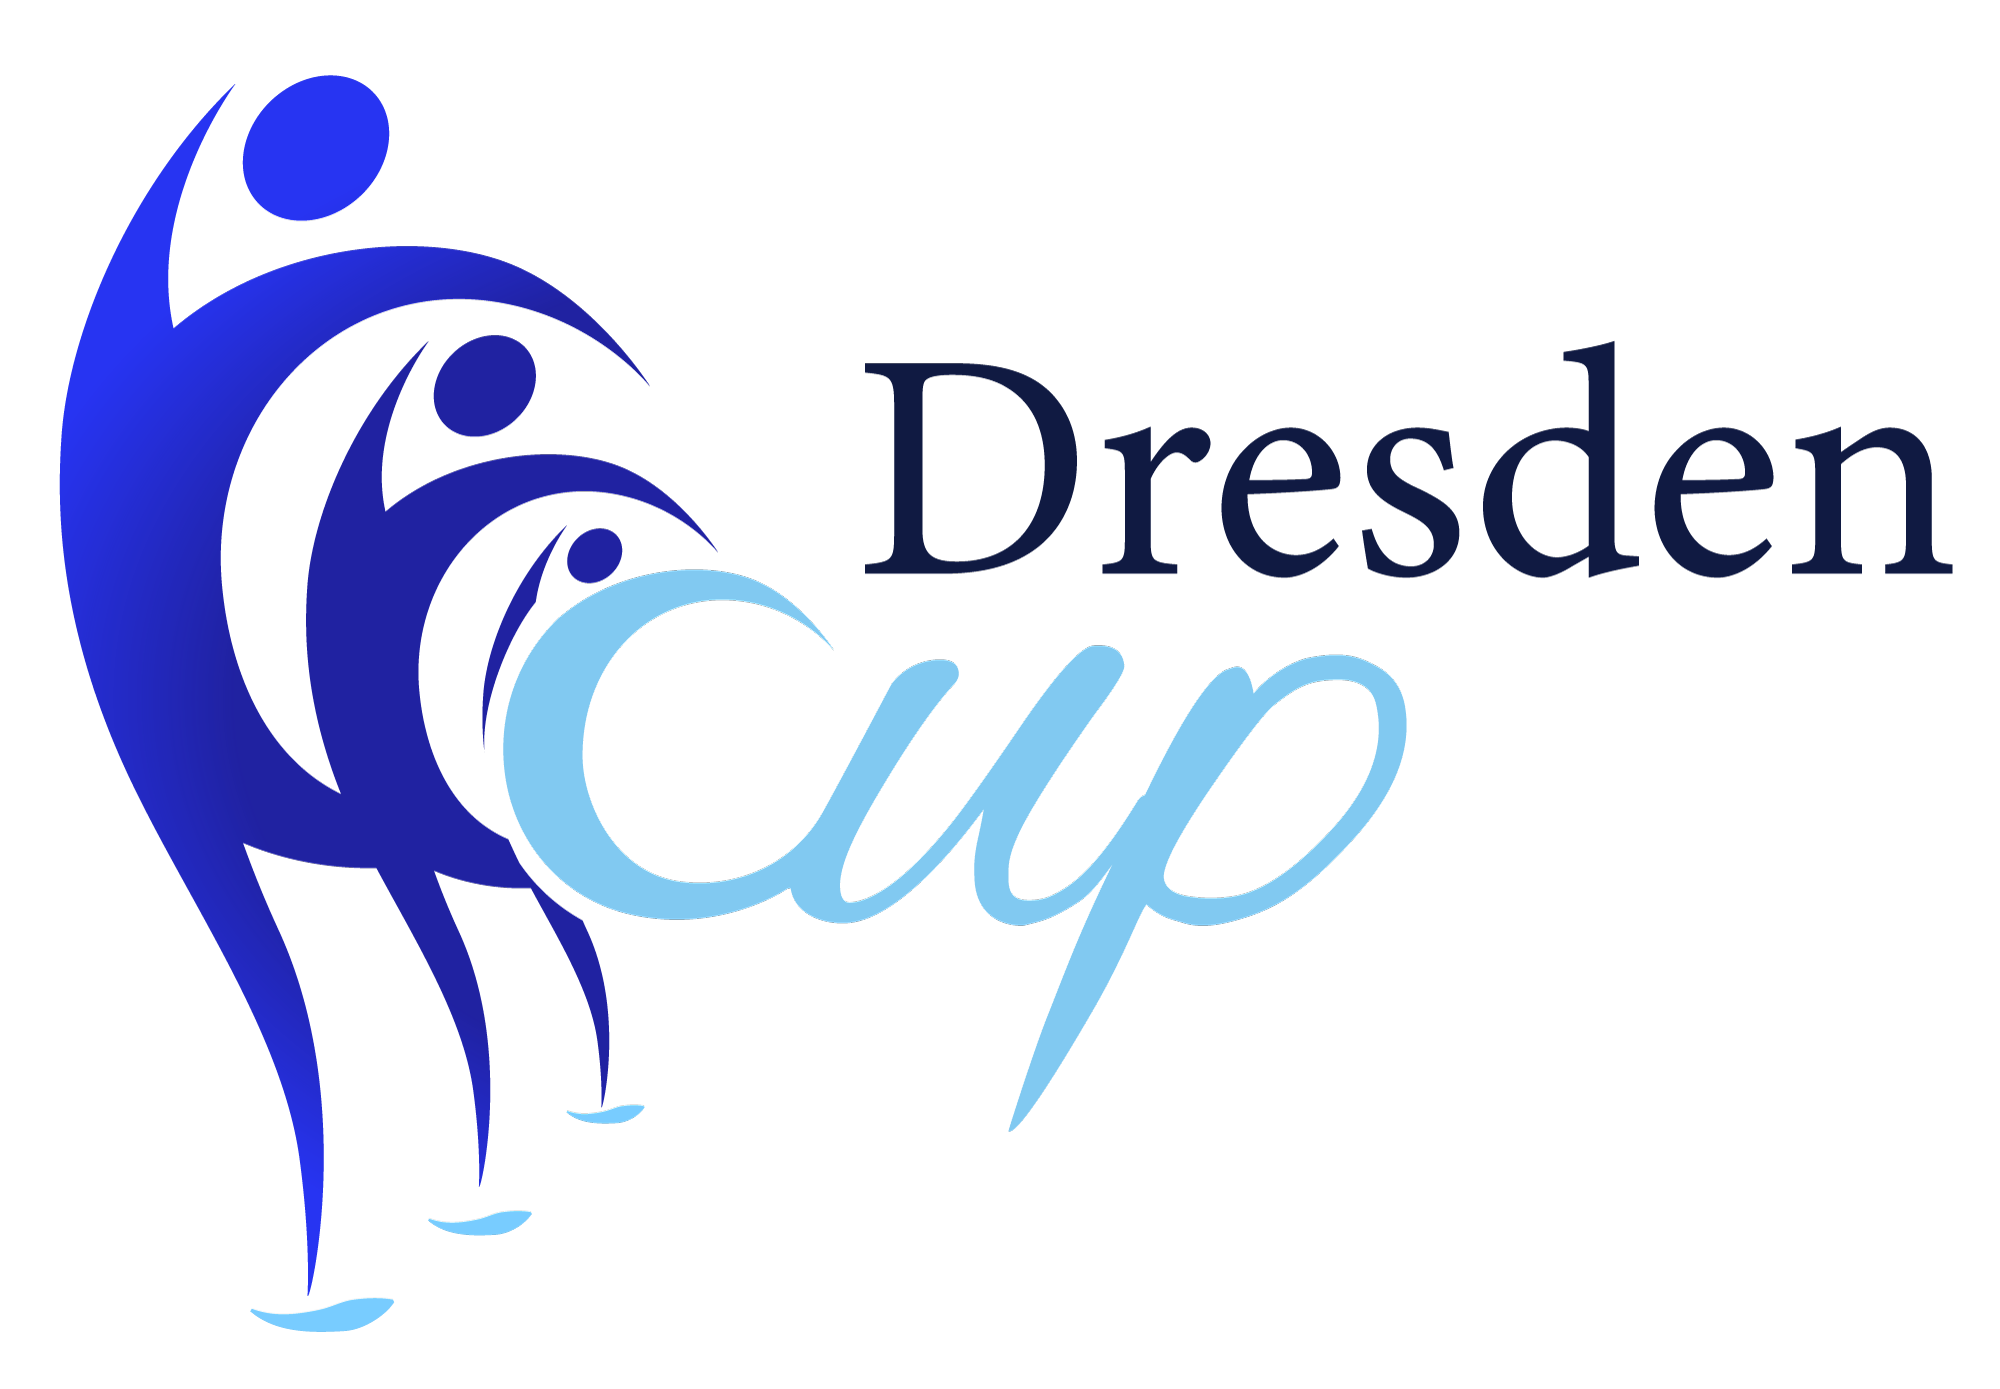 DresdenCup